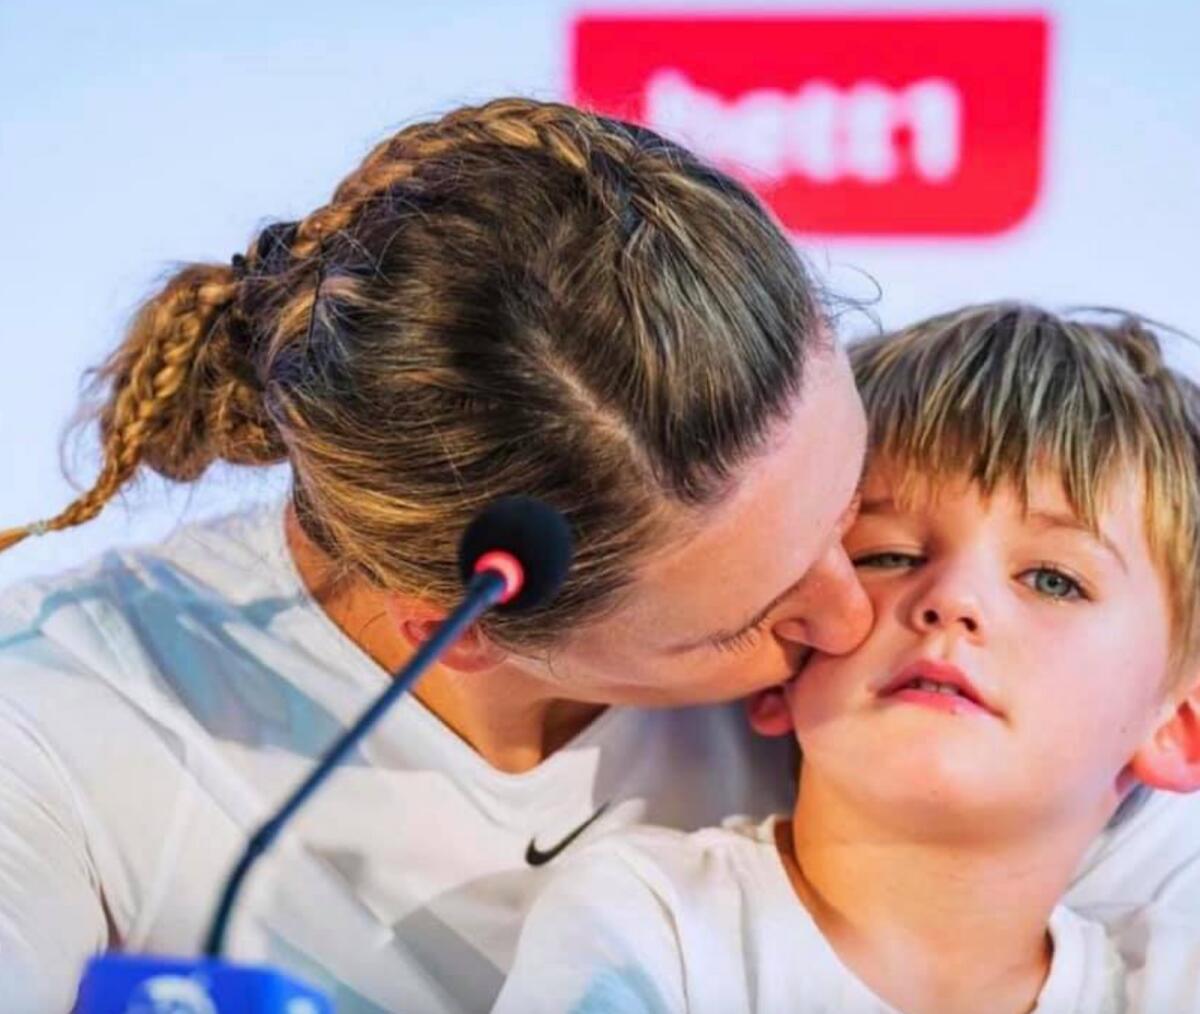 Victoria Azarenka with her son during a press conference. — Facebook